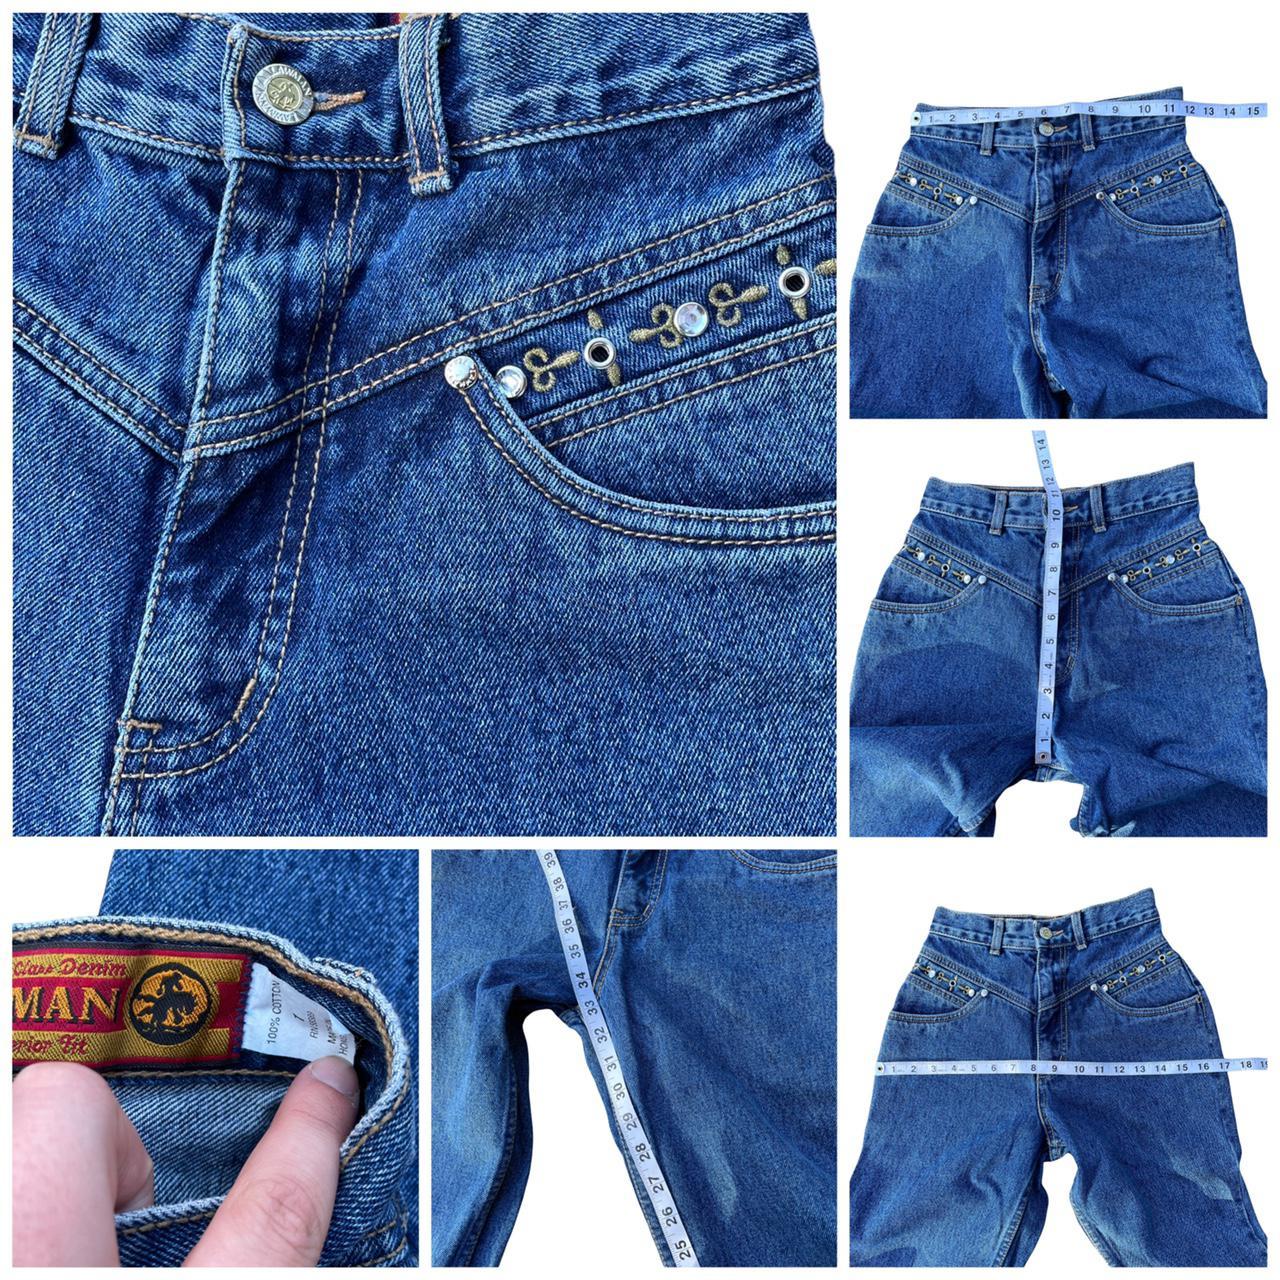 Product Image 4 - Vintage 90s Lawman Western Jeans

Cutest